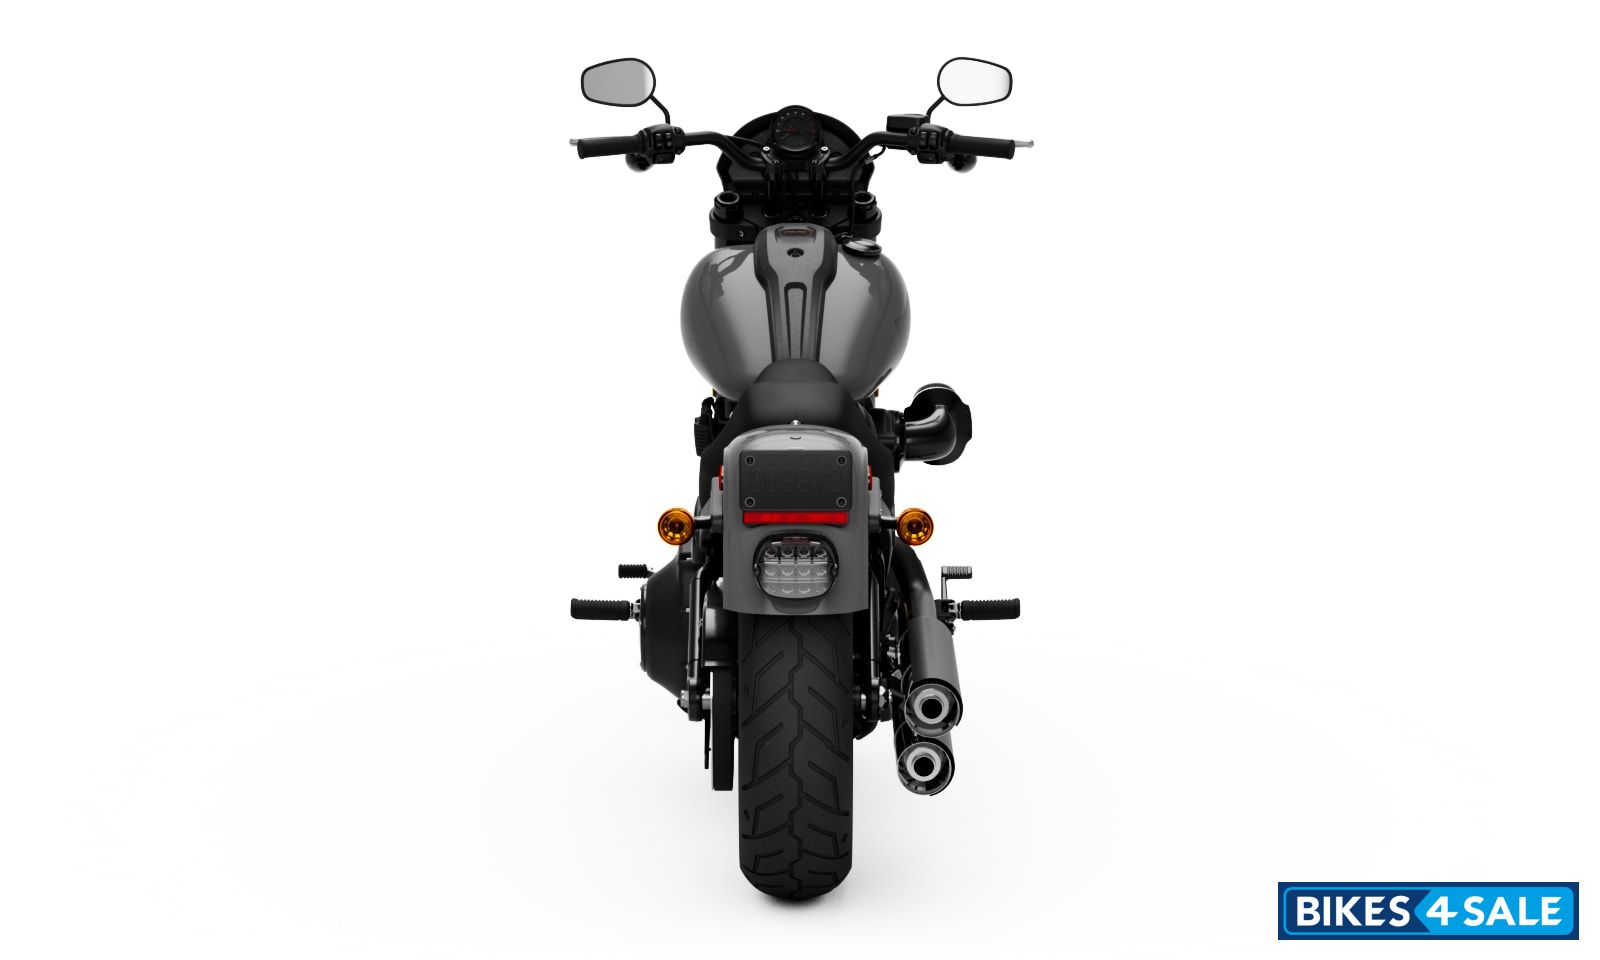 Harley Davidson 2022 Low Rider S